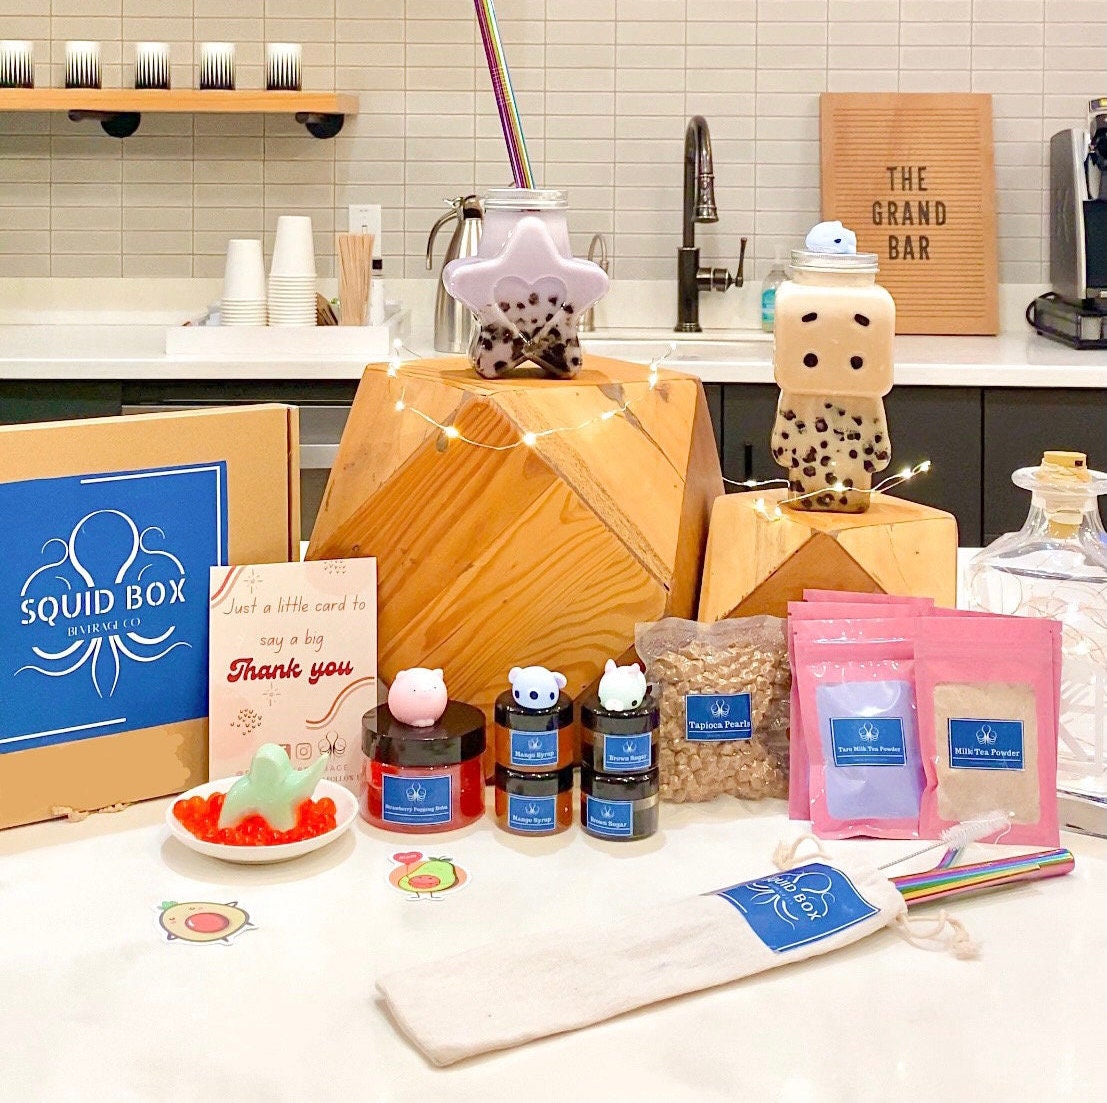 Premium Bubble Tea Kit, Black Tea & Roasted Oolong Tea Gift Set (adeline Kit) Bo